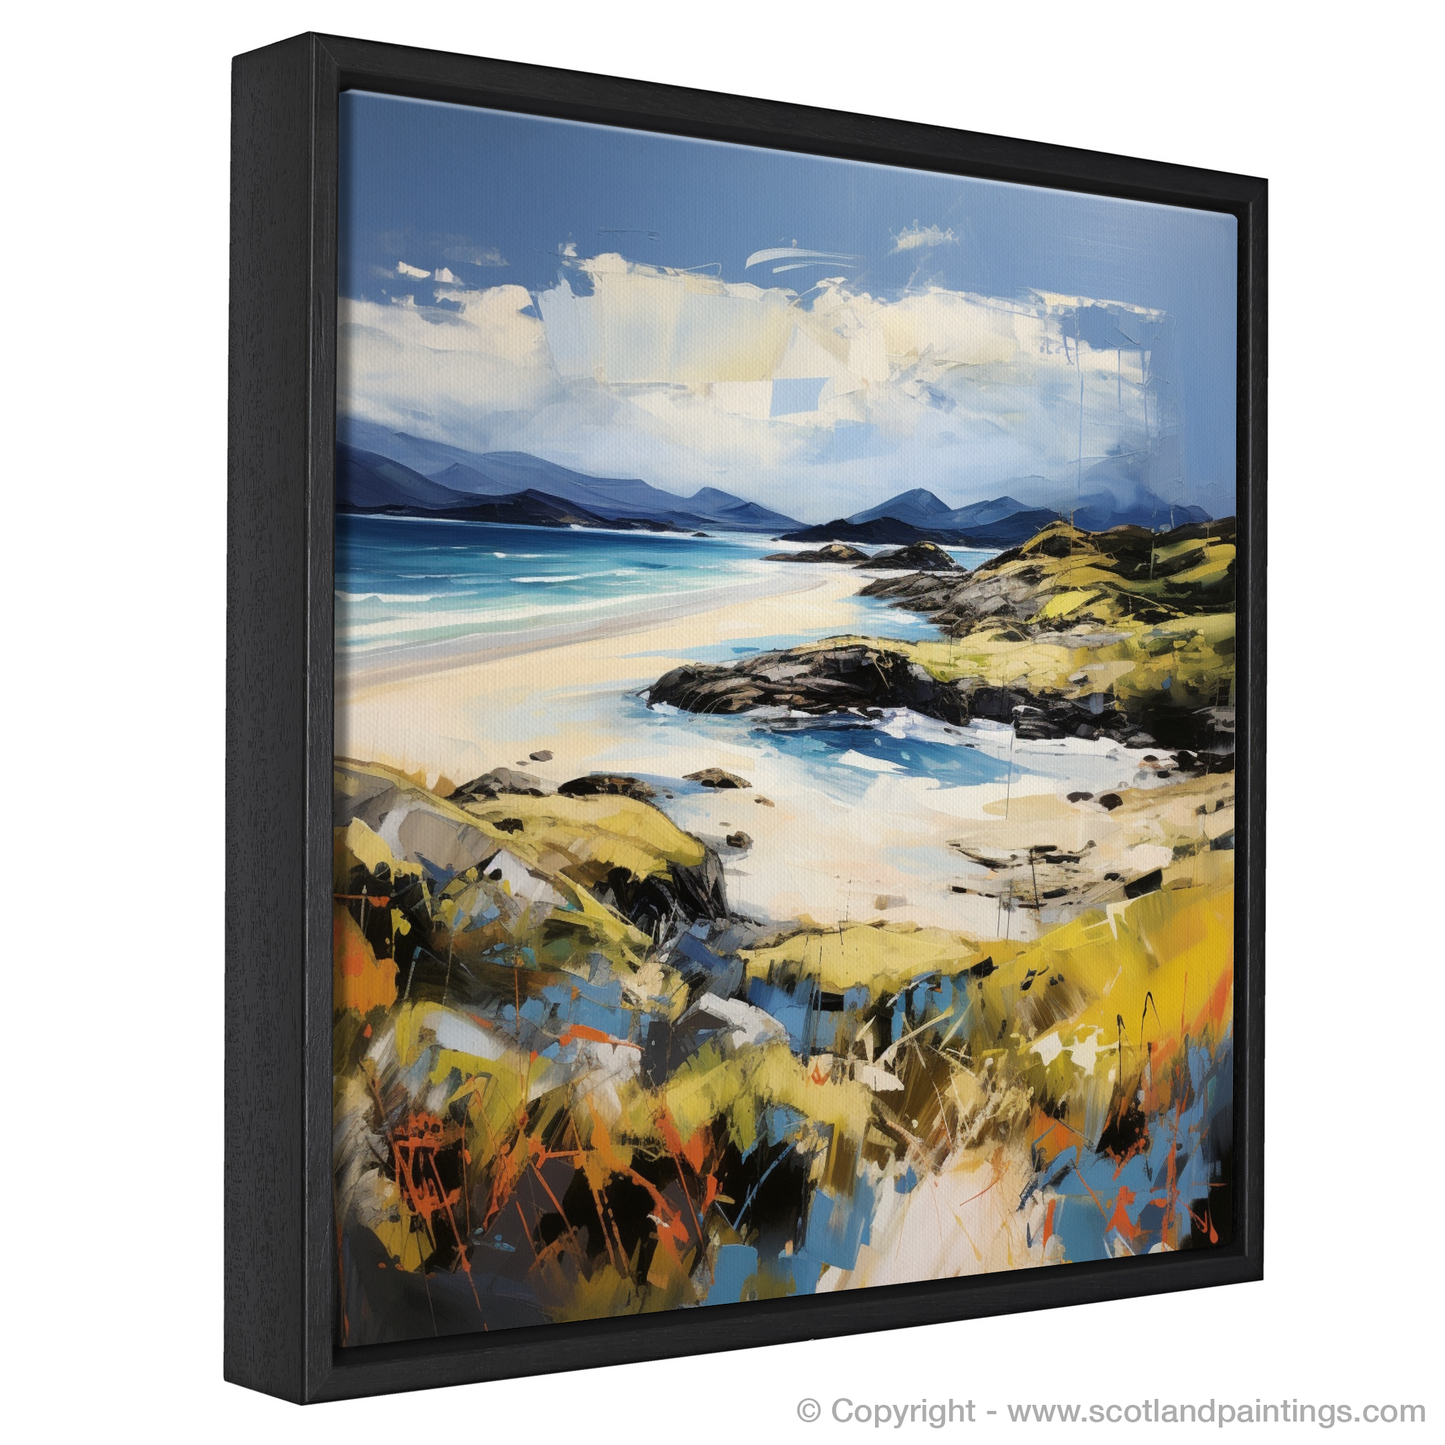 Painting and Art Print of Camusdarach Beach, Arisaig entitled "Restless Spirit of Camusdarach Beach".